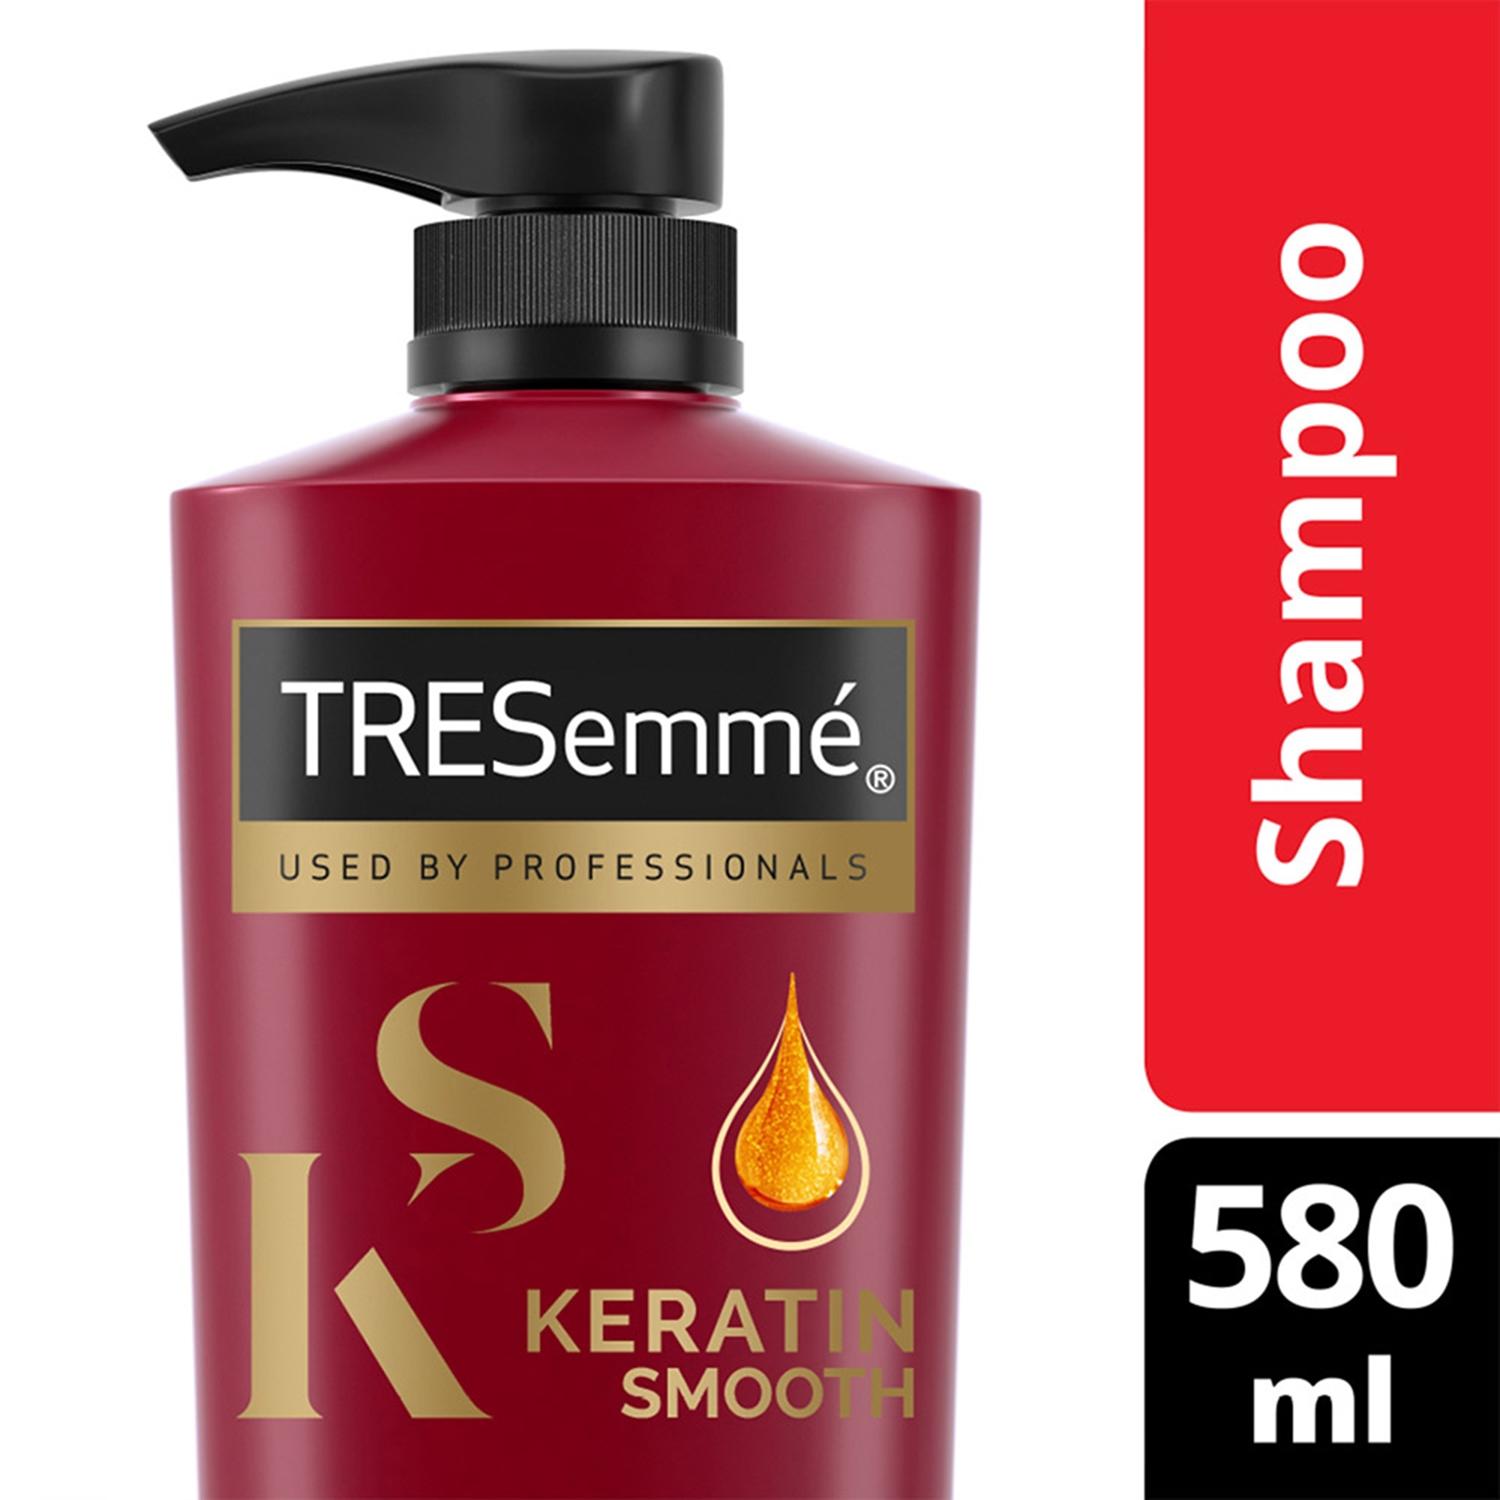 tresemme keratin smooth shampoo - (580ml)